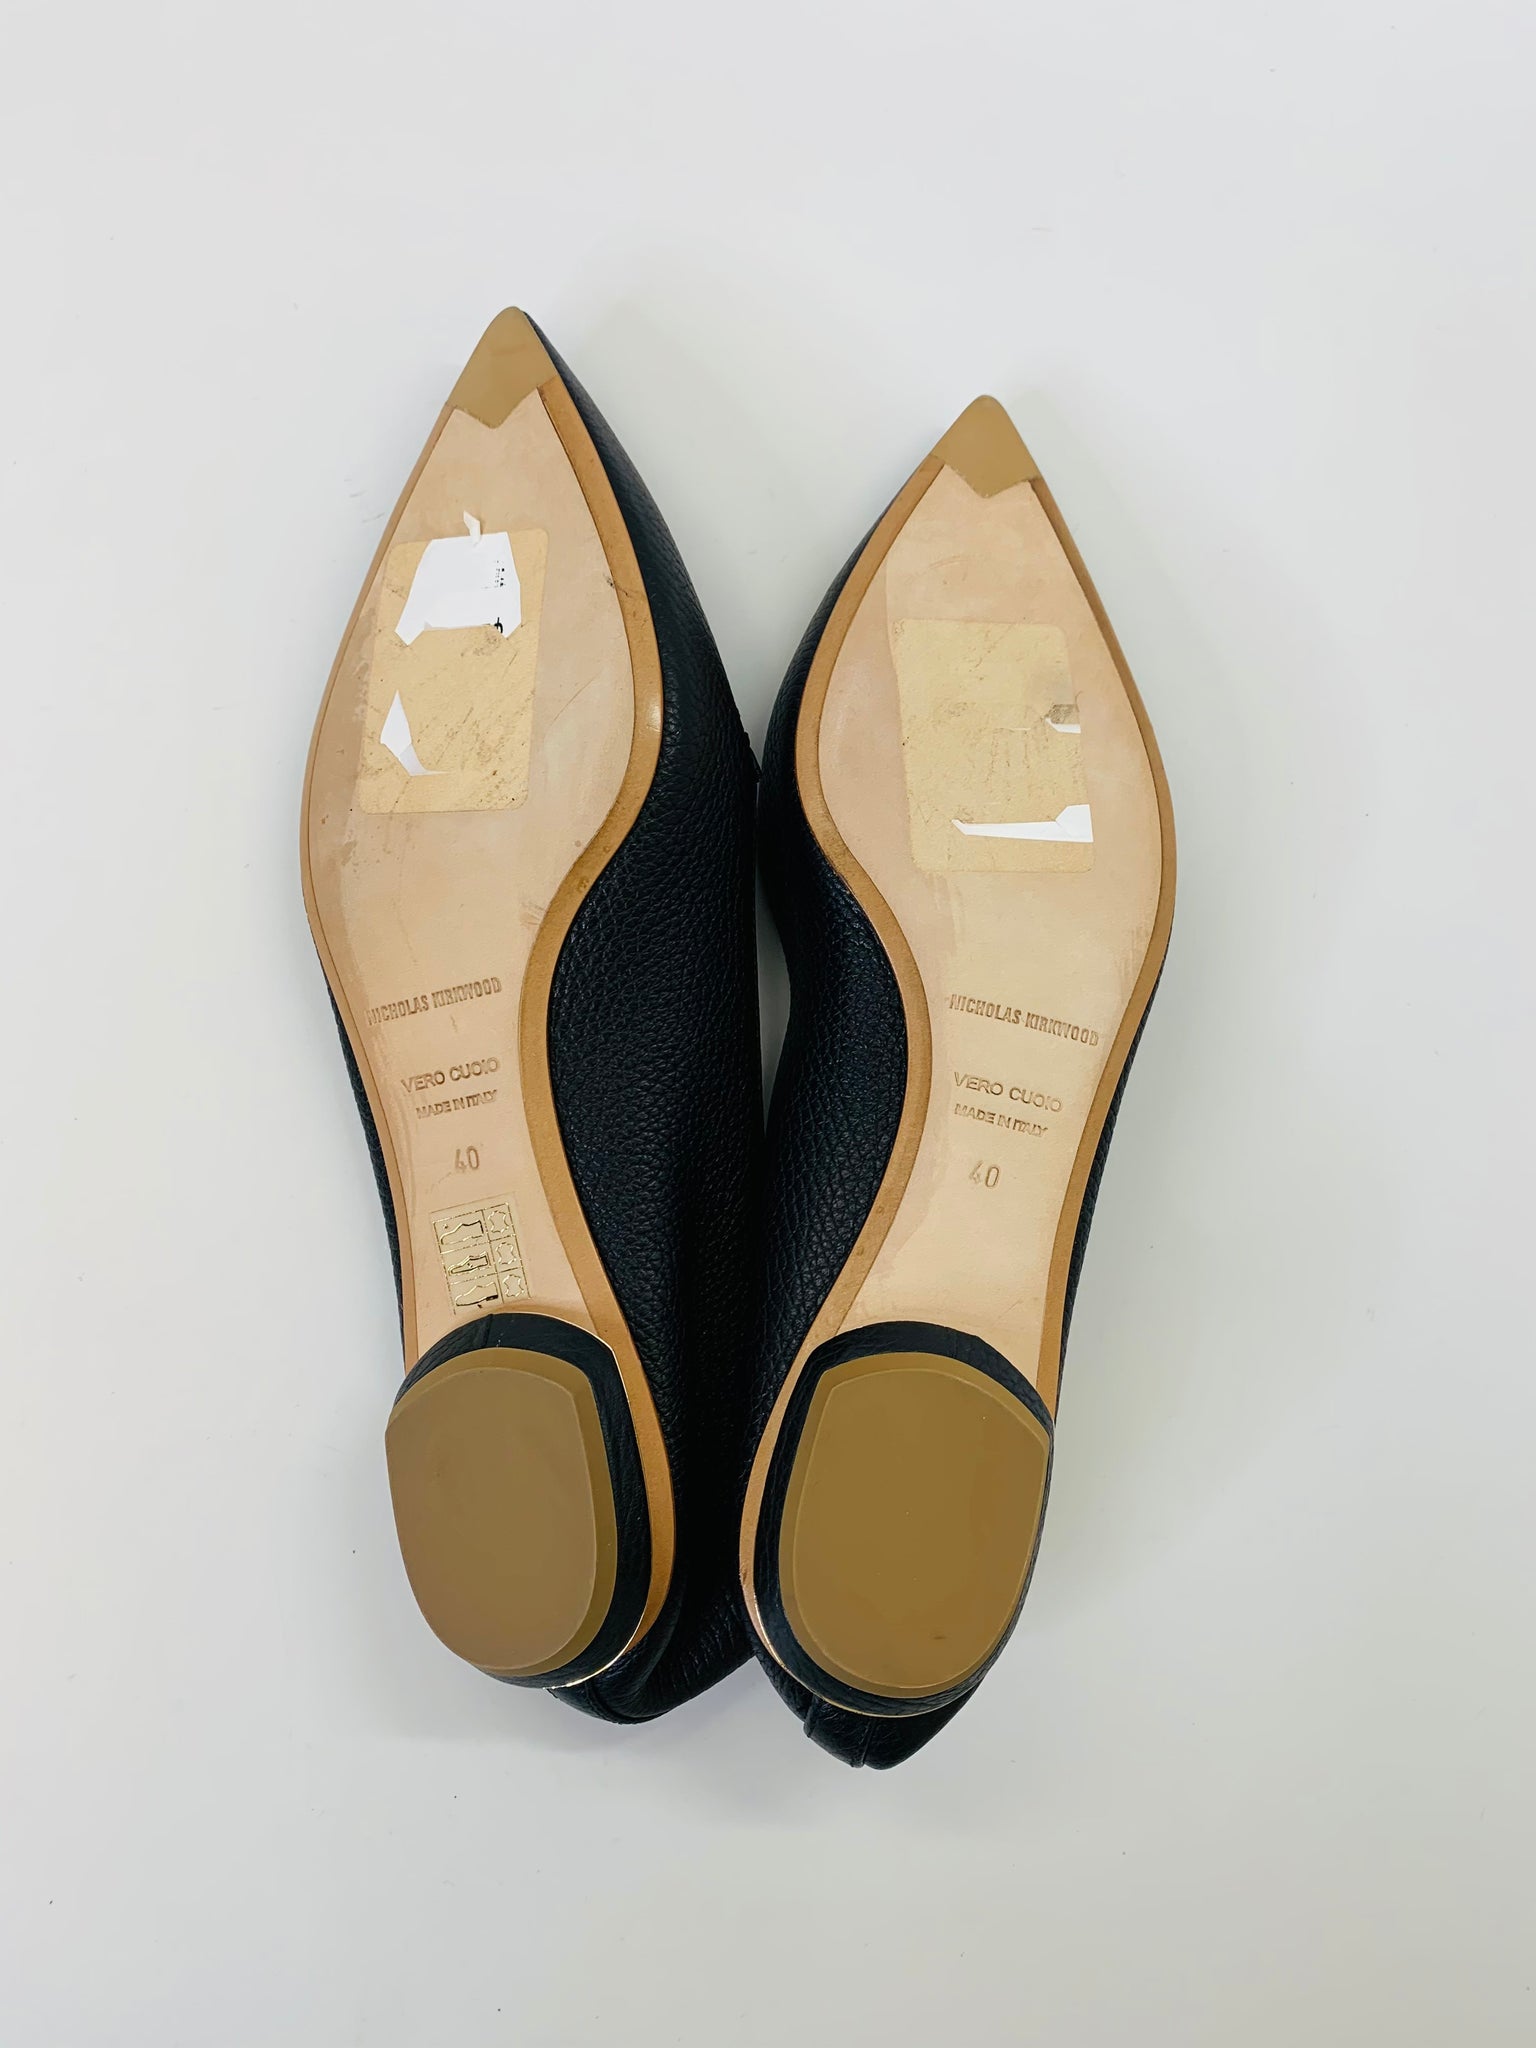 Nicholas Kirkwood Silver Leather and Glitter Beya Loafers Size 40.5  Nicholas Kirkwood | The Luxury Closet